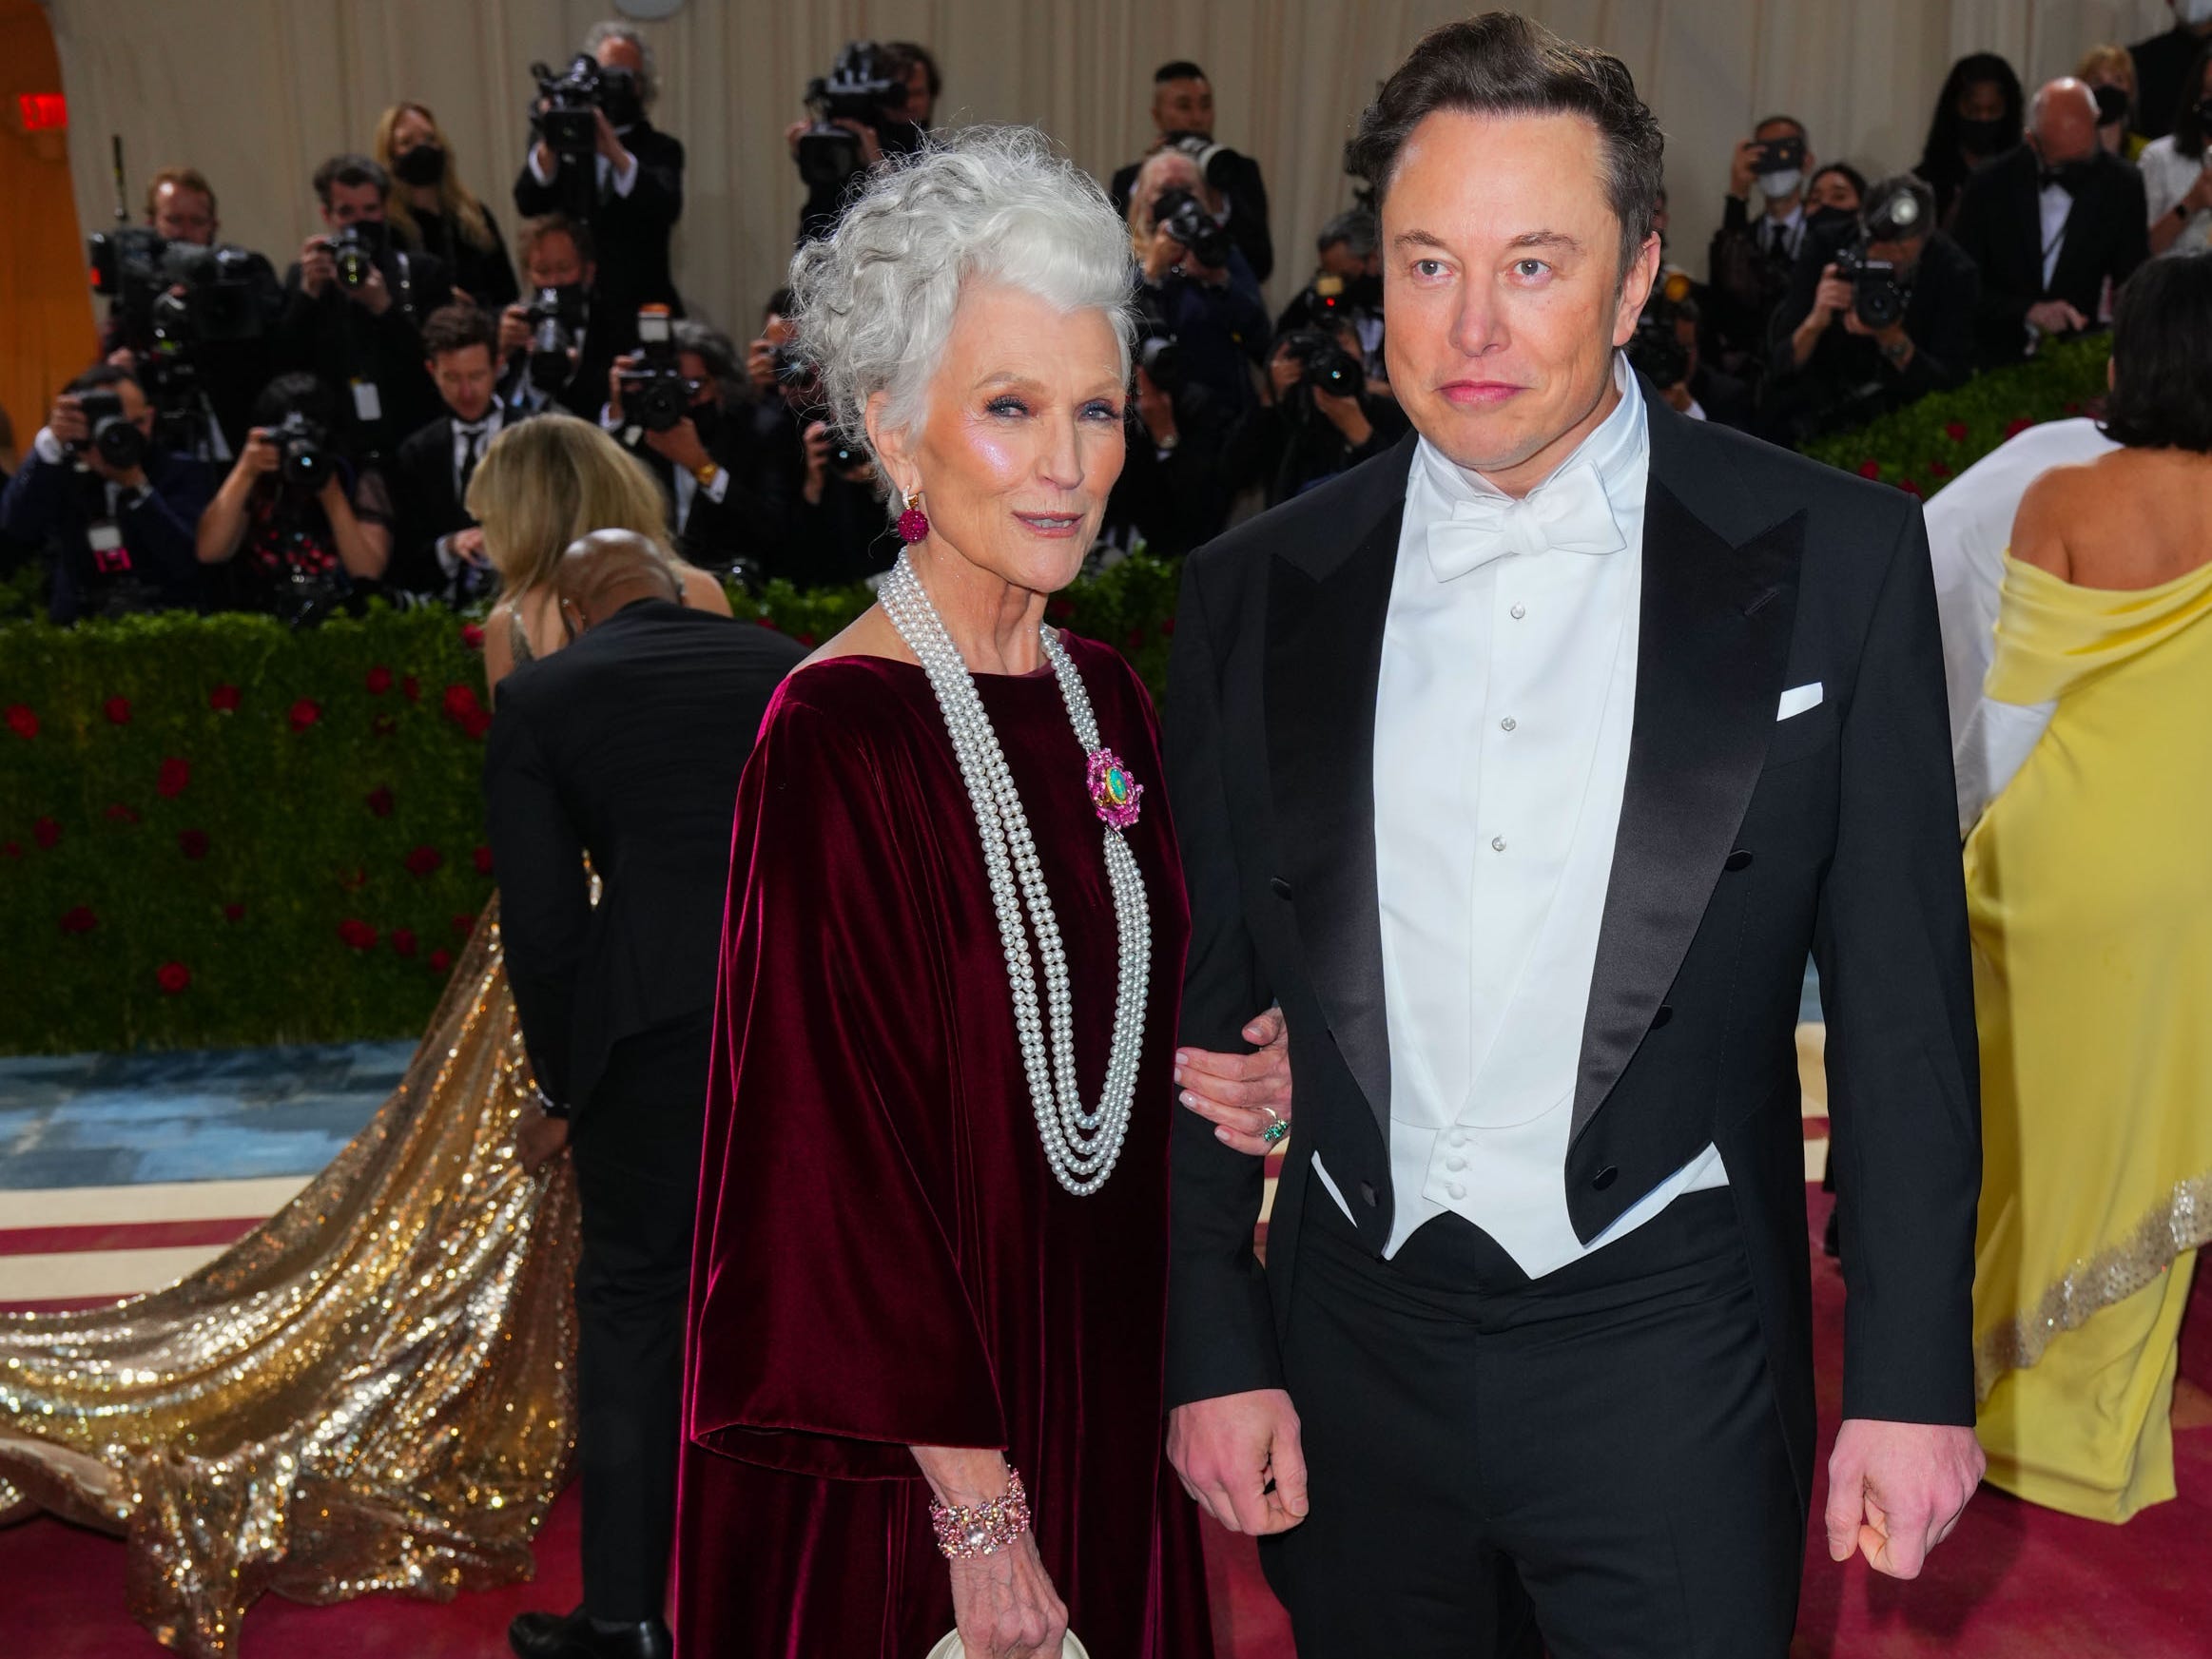 Maye Musk and Elon Musk at the Met Gala in May, 2022.